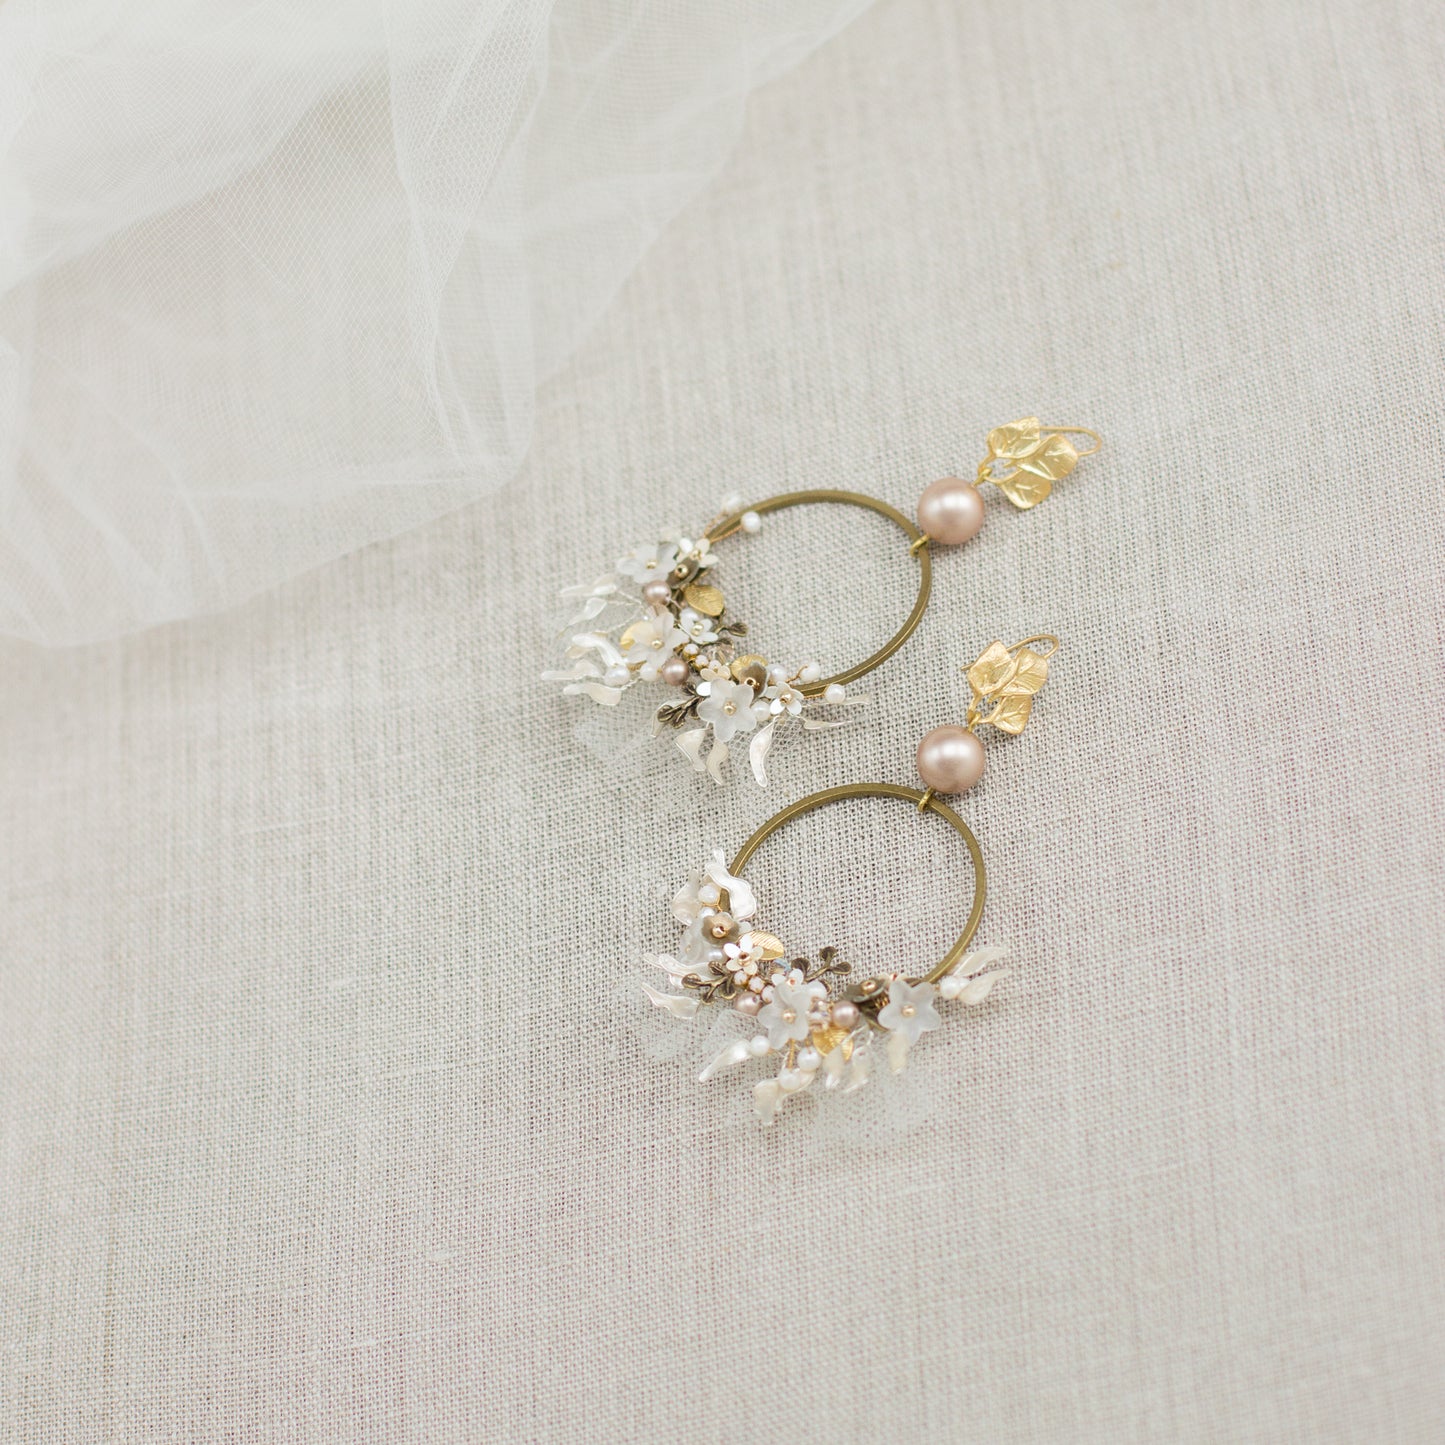 Stylish & unique hoop earrings to make a statement! Floral Pearl Hoop earrings. Wedding earrings. Bridal jewelry. Powder almond earrings. Handmade jewelry. Woman fashion bijouterie. One of a kind accessories.